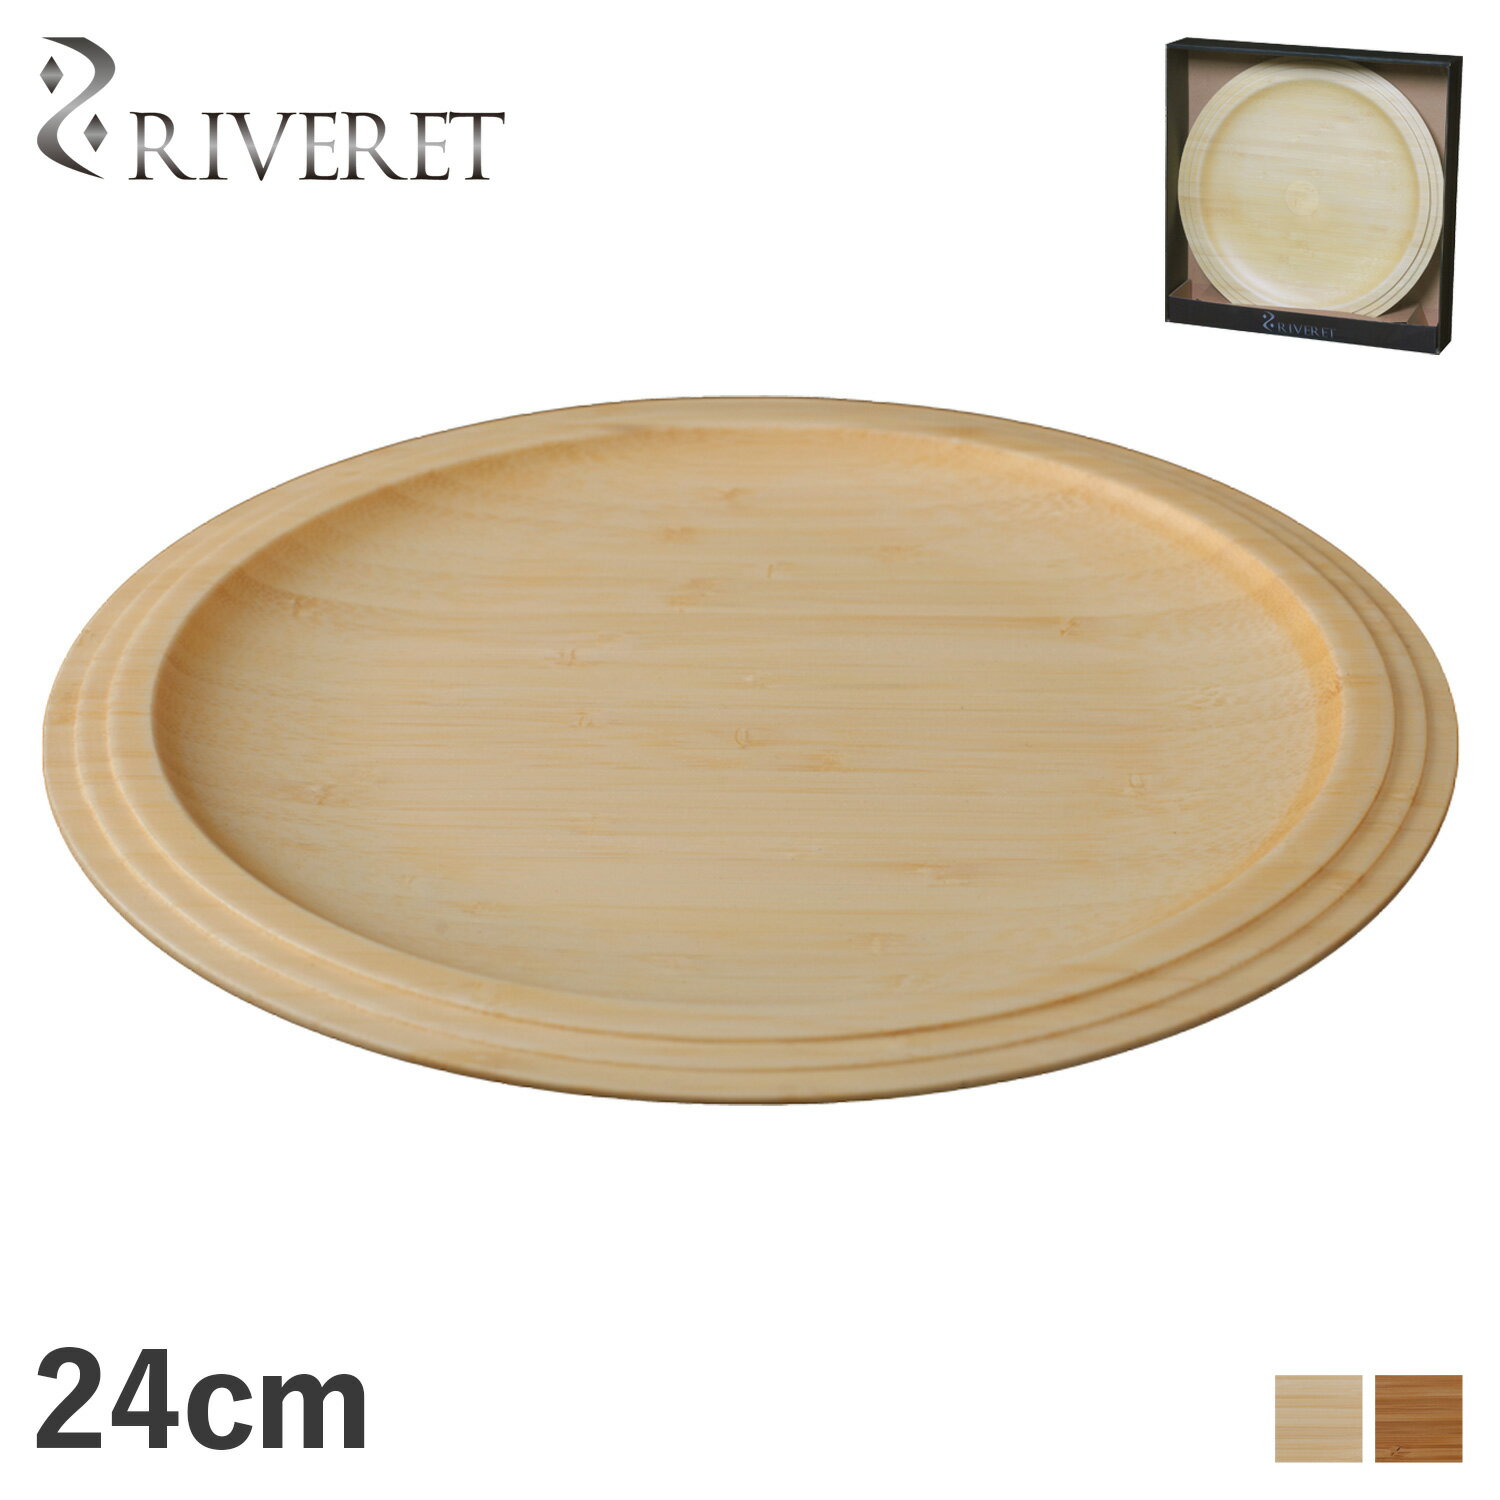 RIVERET リヴェレット プレート 24cm 皿 天然素材 日本製 軽量 食洗器対応 リベレット PLATE ホワイト ブラウン 白 RV-403 母の日